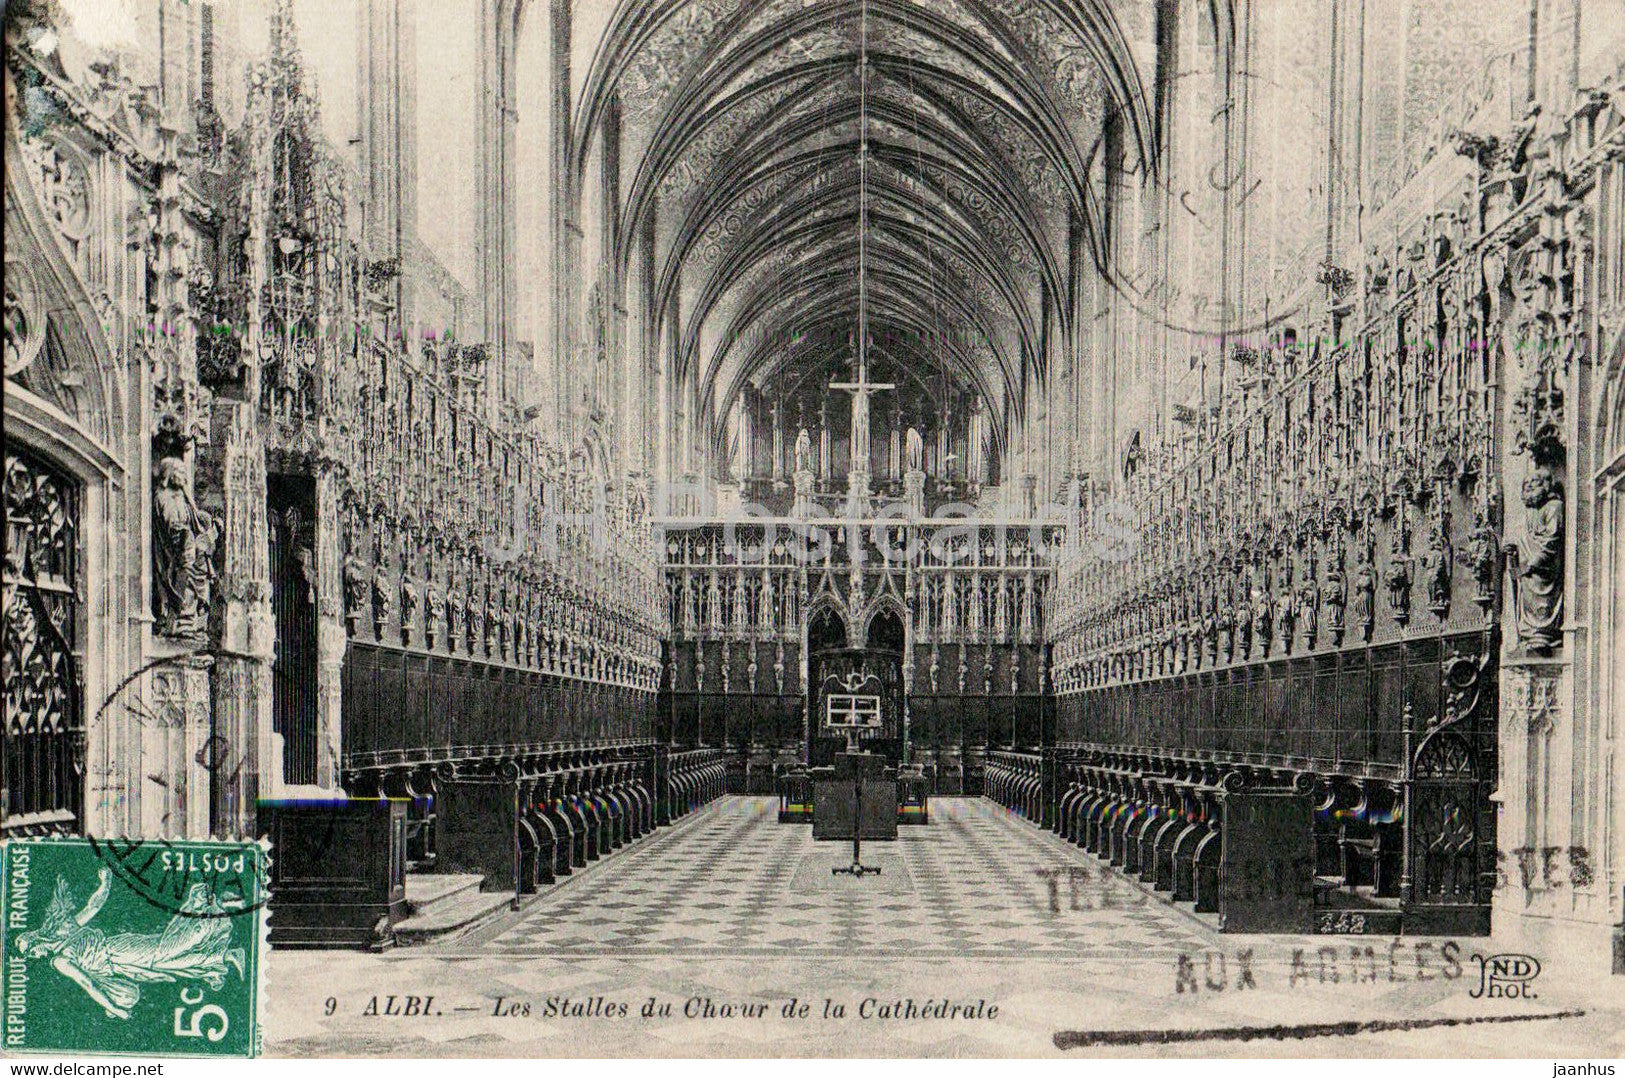 Albi - Les Stalles du Choeur de la Cathedrale - cathedral - 9 - old postcard - 1910 - France - used - JH Postcards